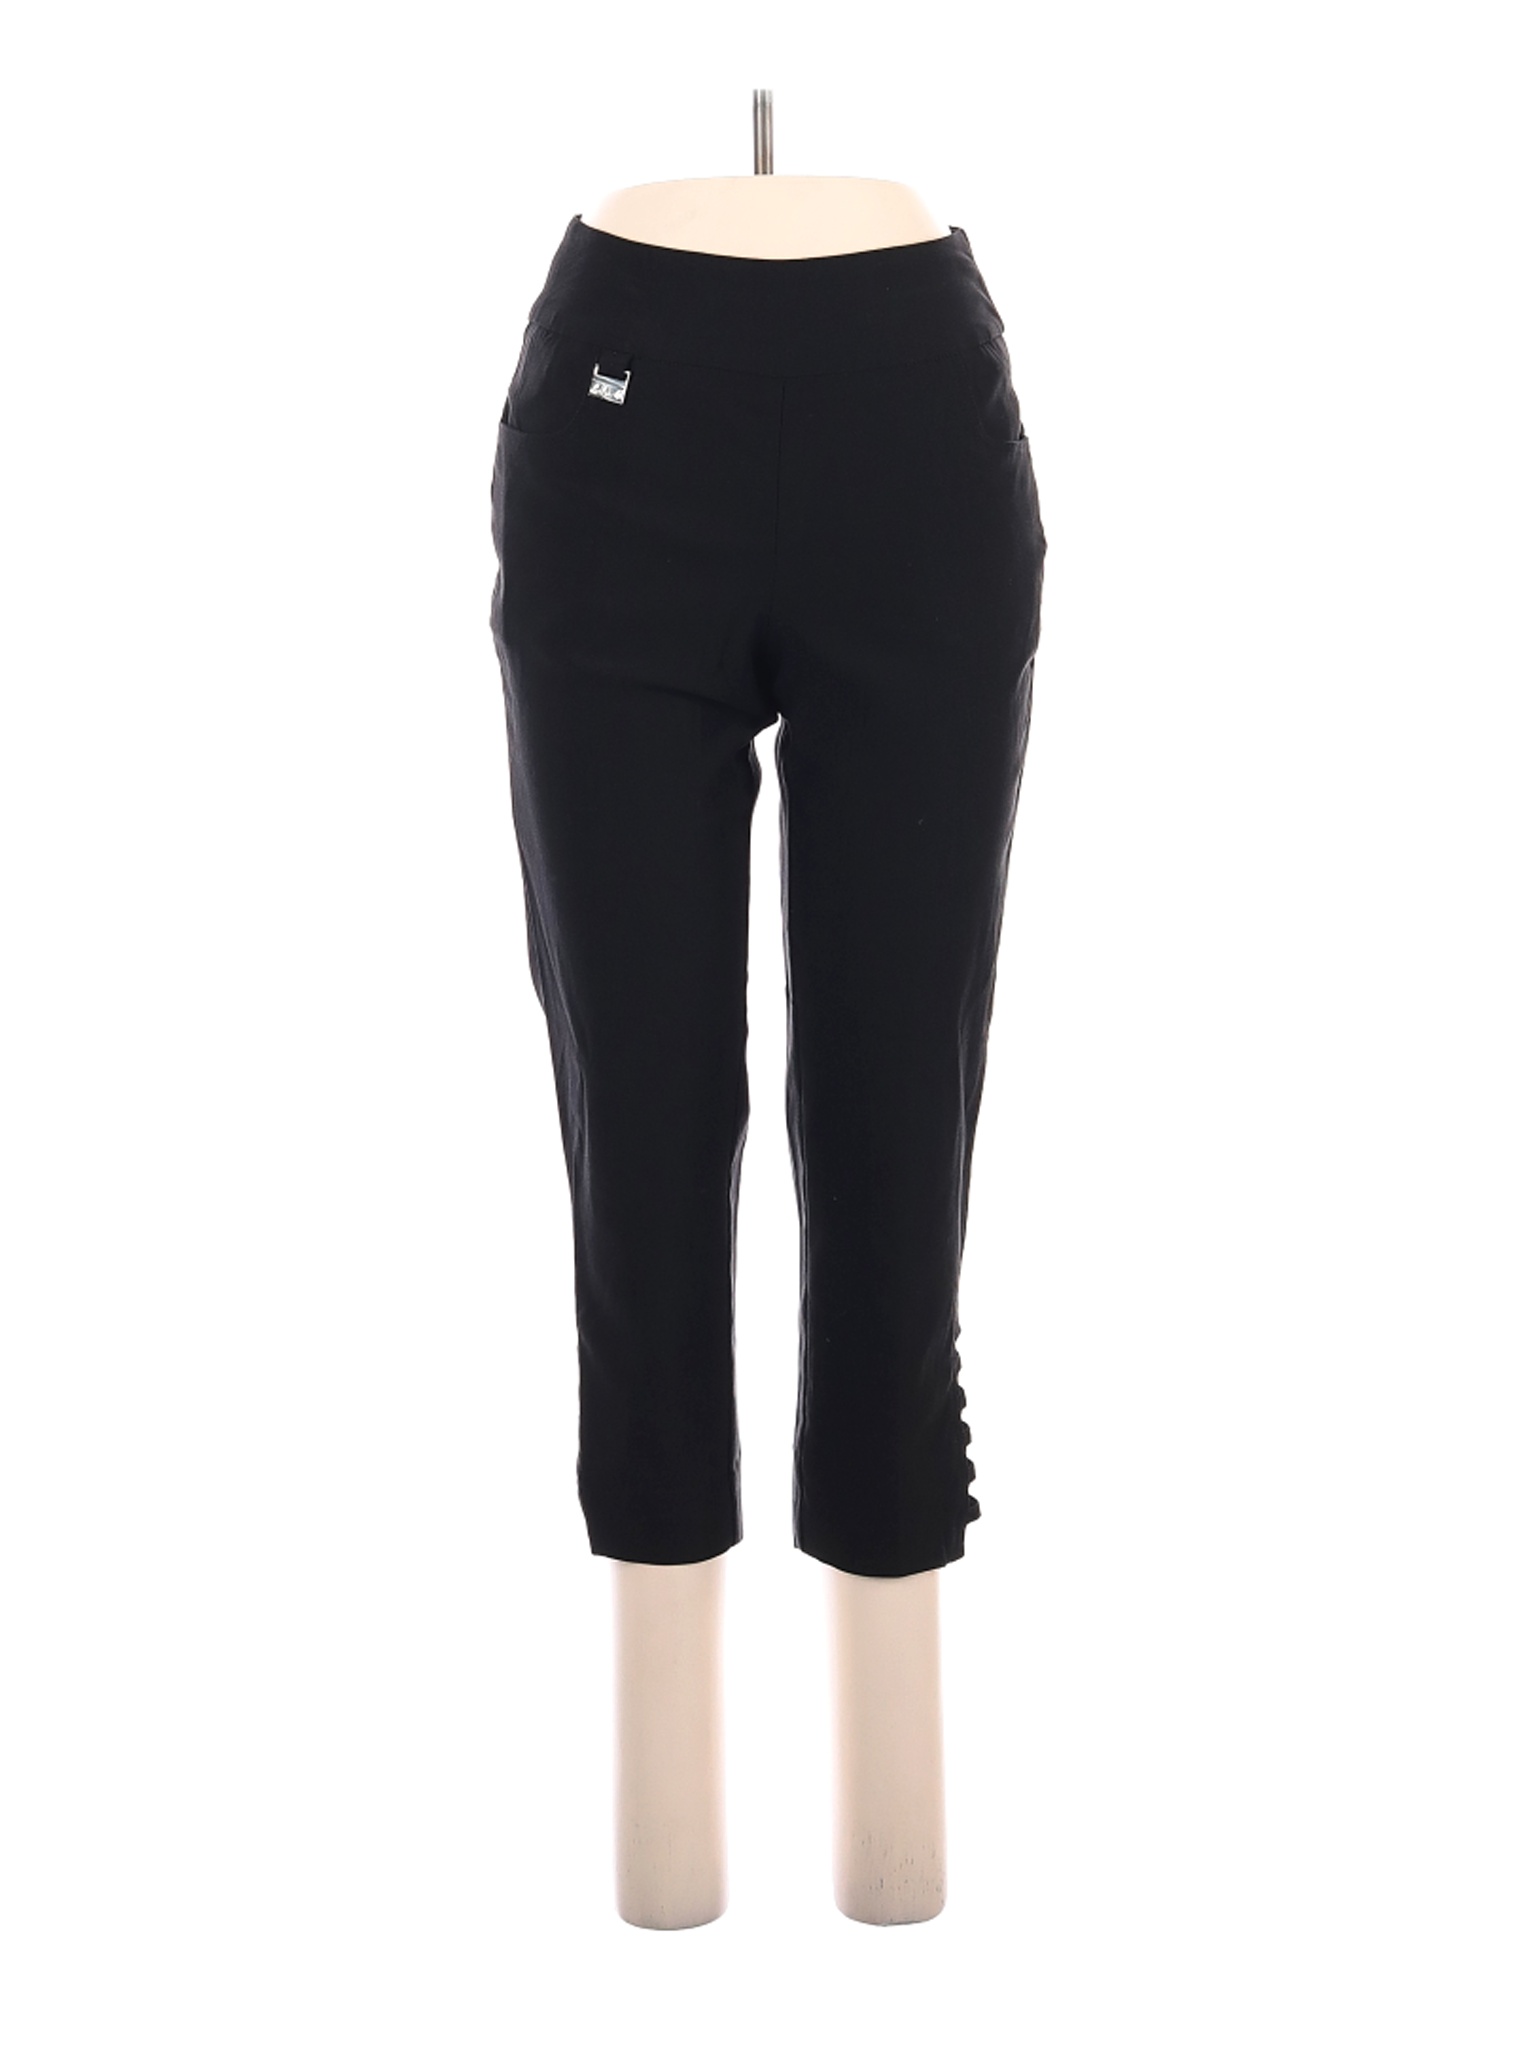 Lulu-B Black Casual Pants Size 3X (Plus) - 73% off